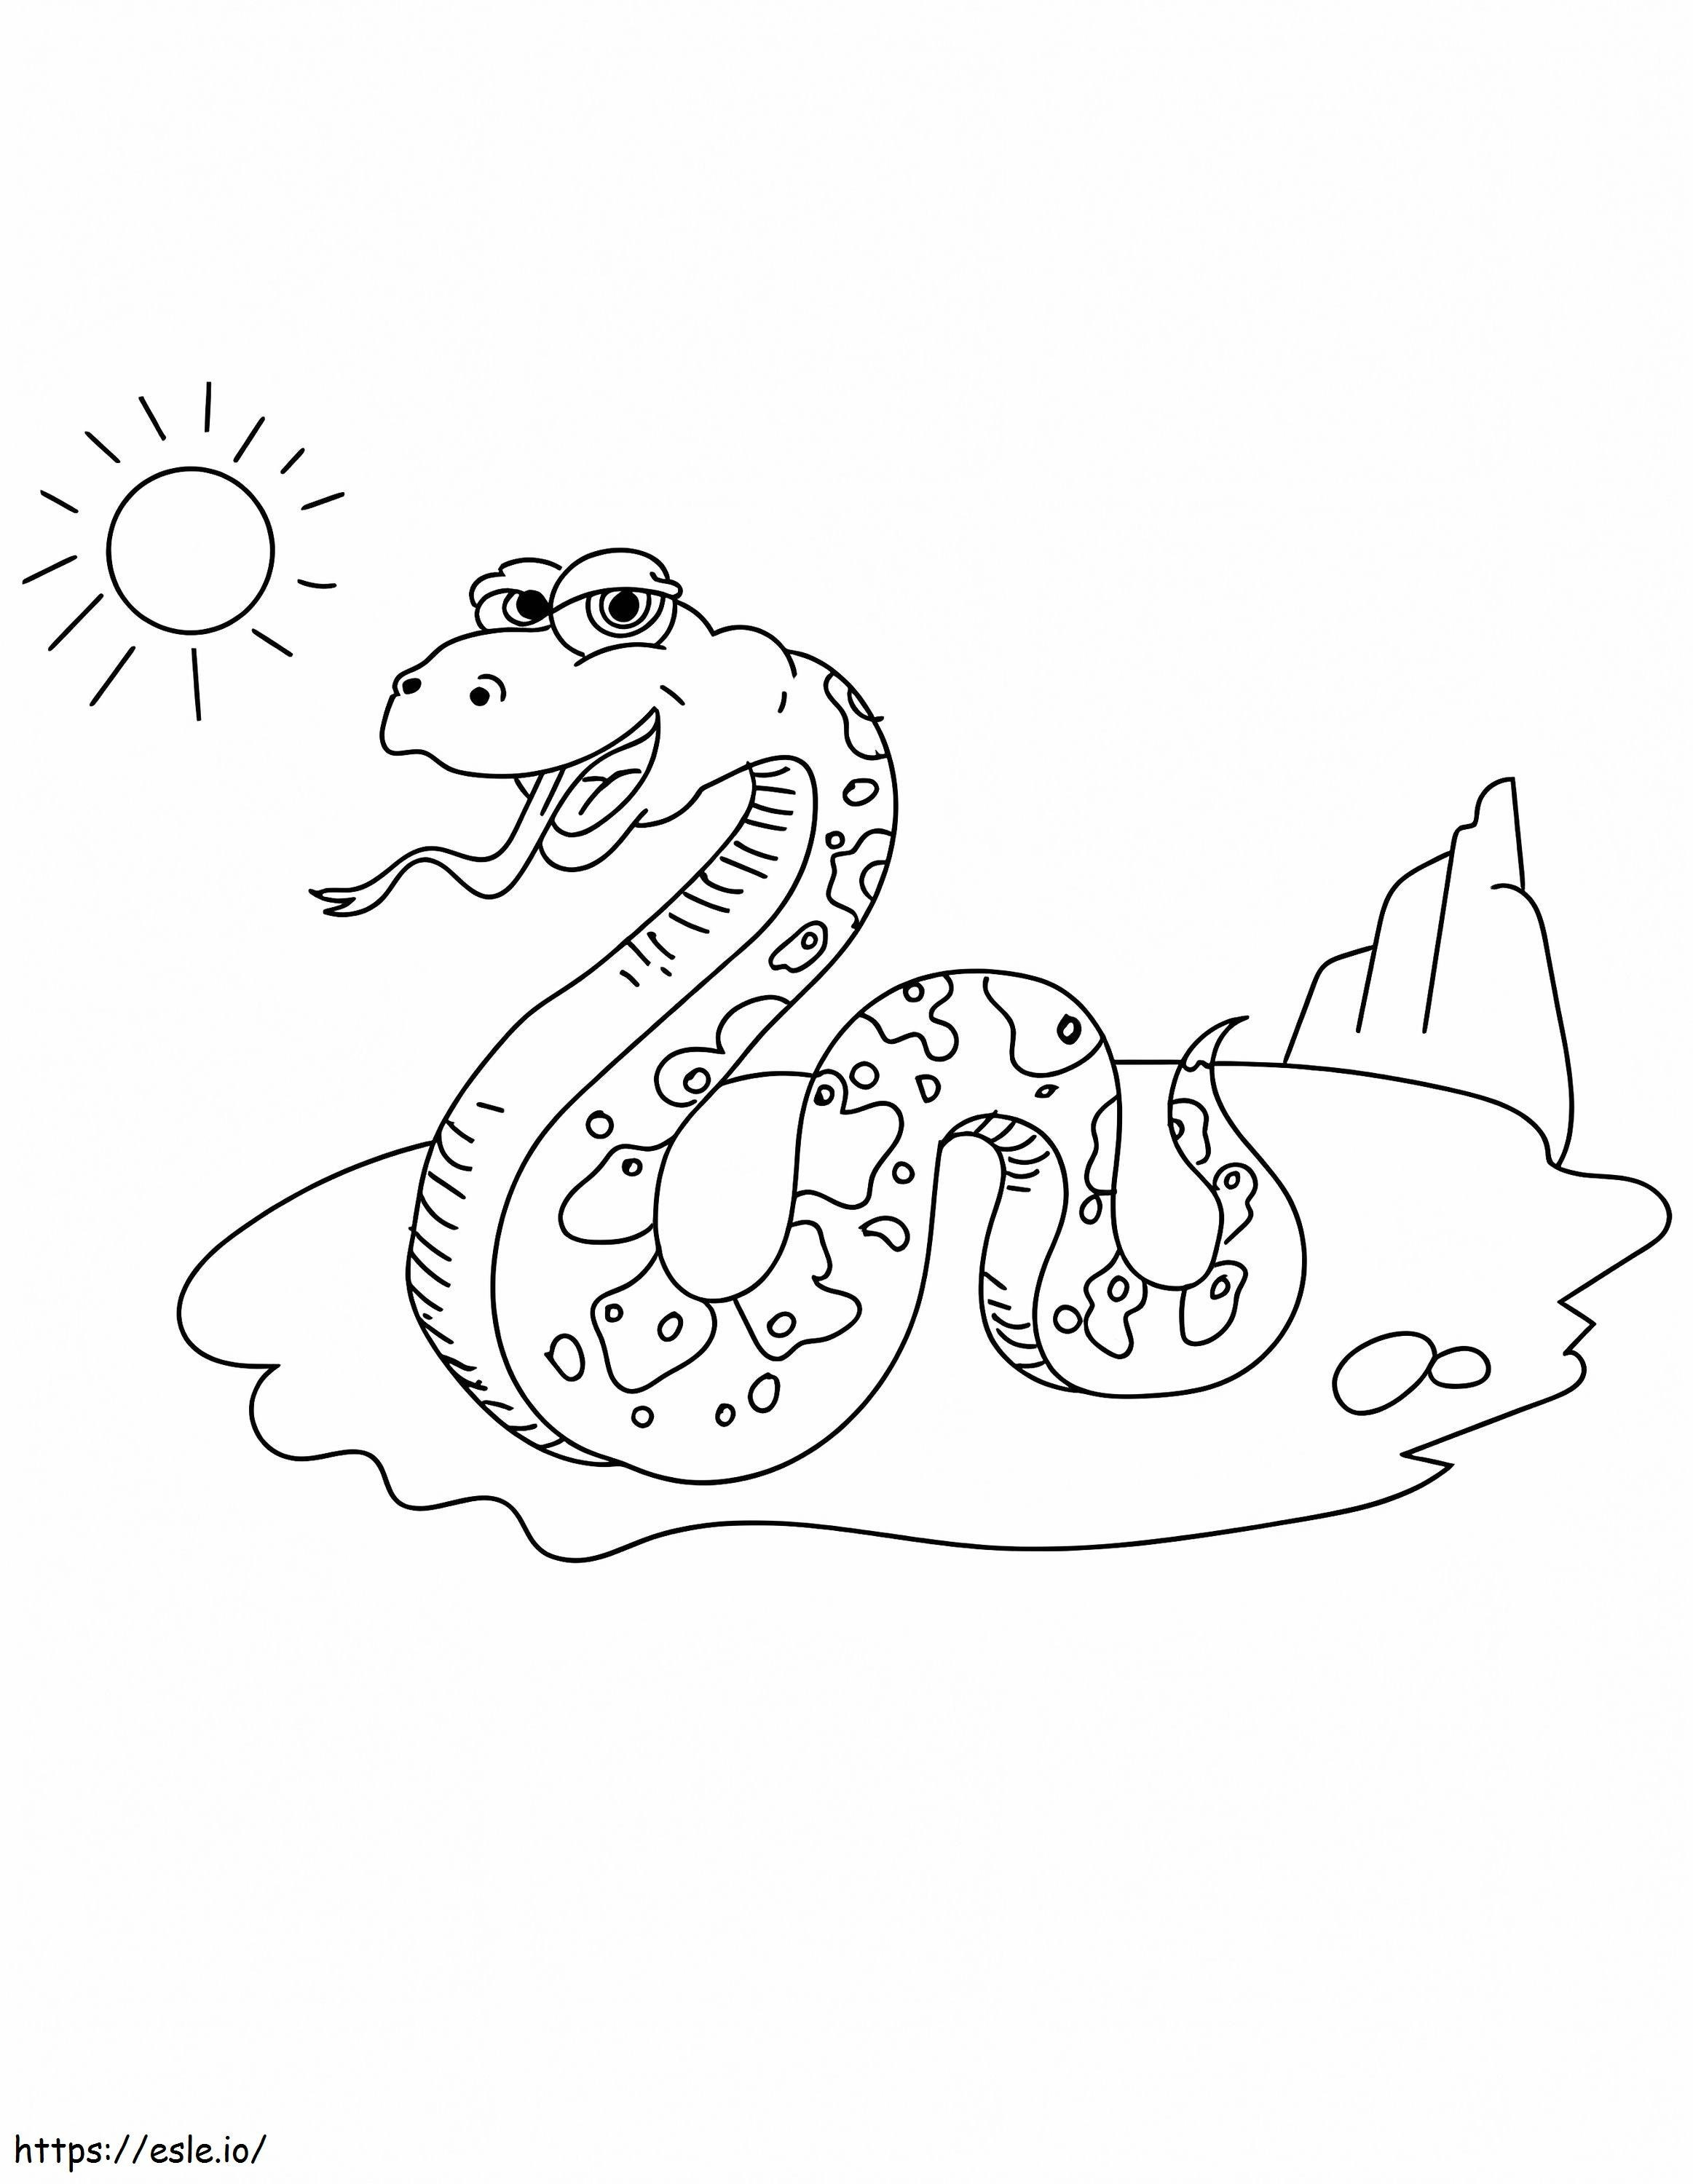 Free Printable Snake coloring page